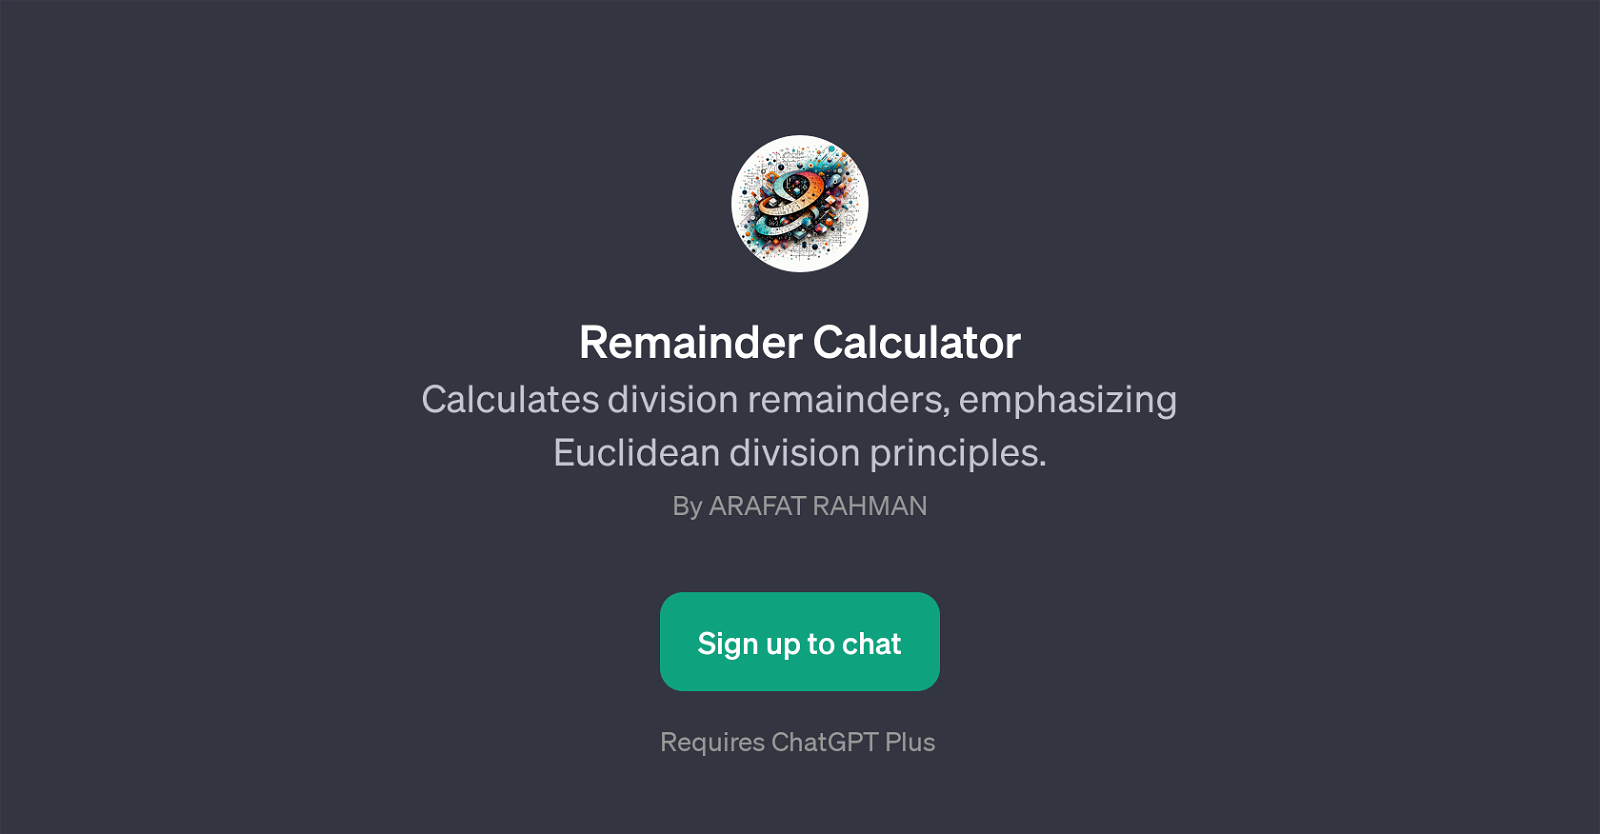 Remainder Calculator website